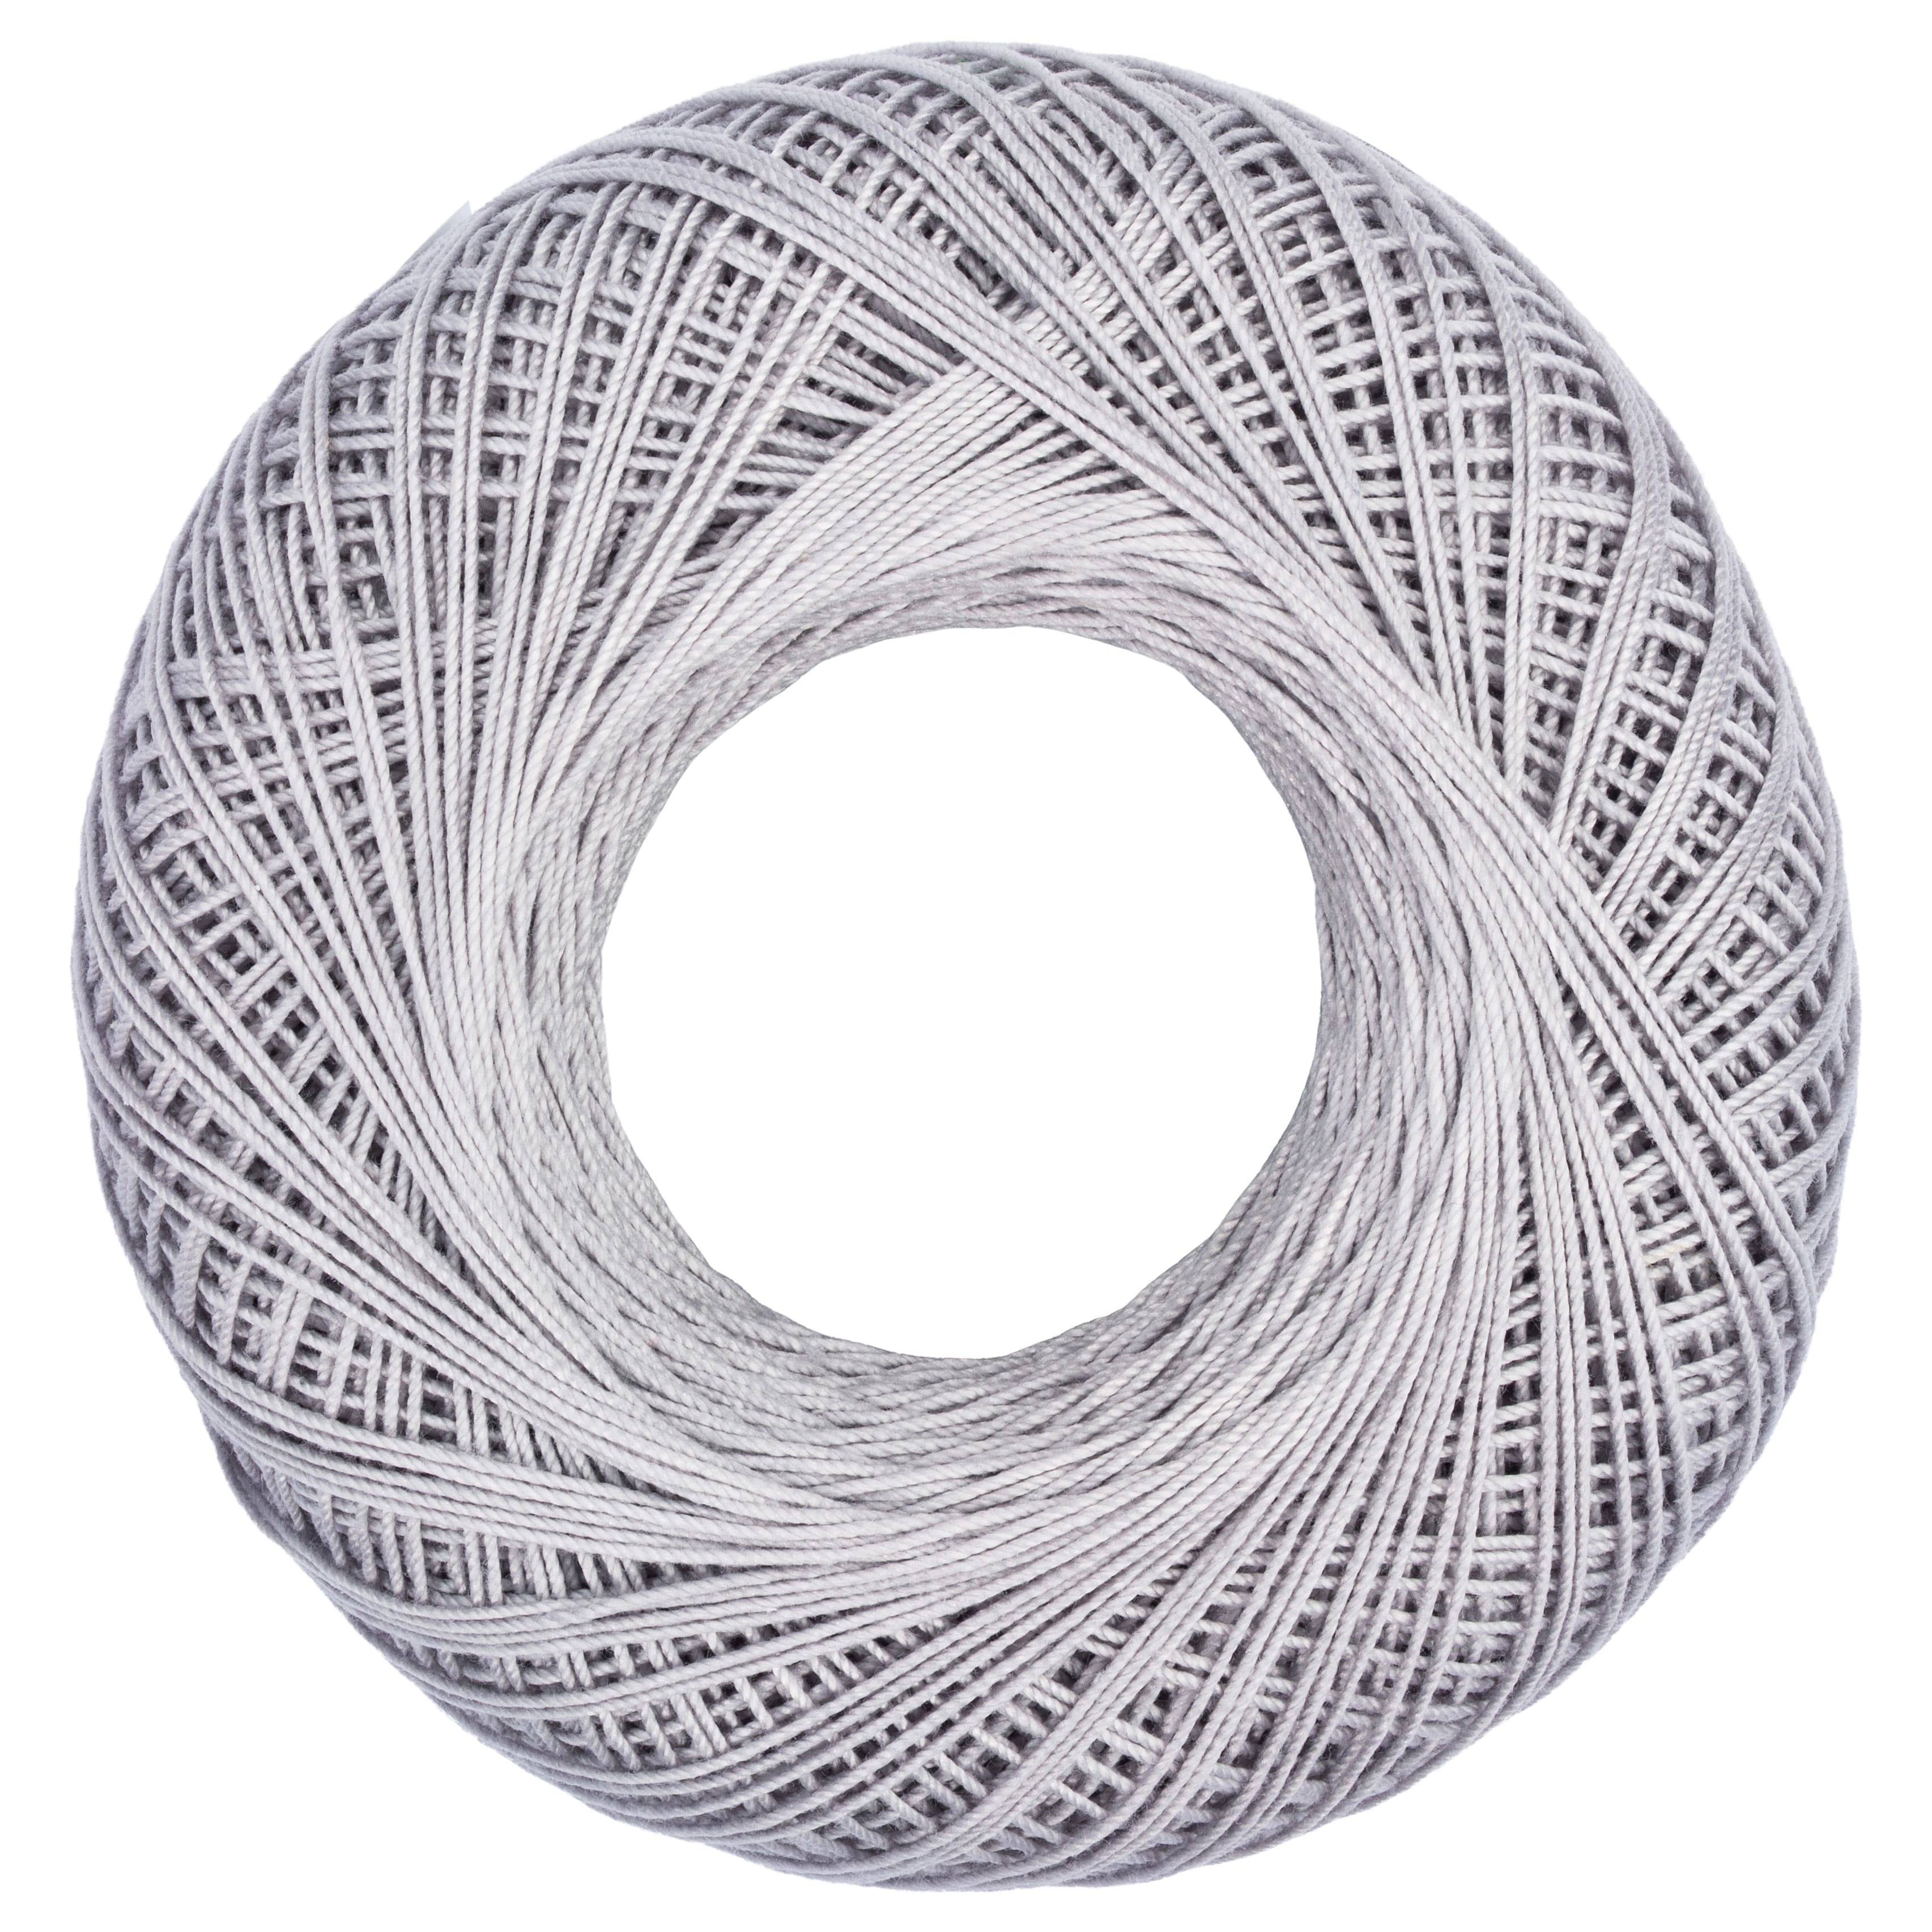 Coats Aunt Lydias Classic Crochet Thread – Good's Store Online